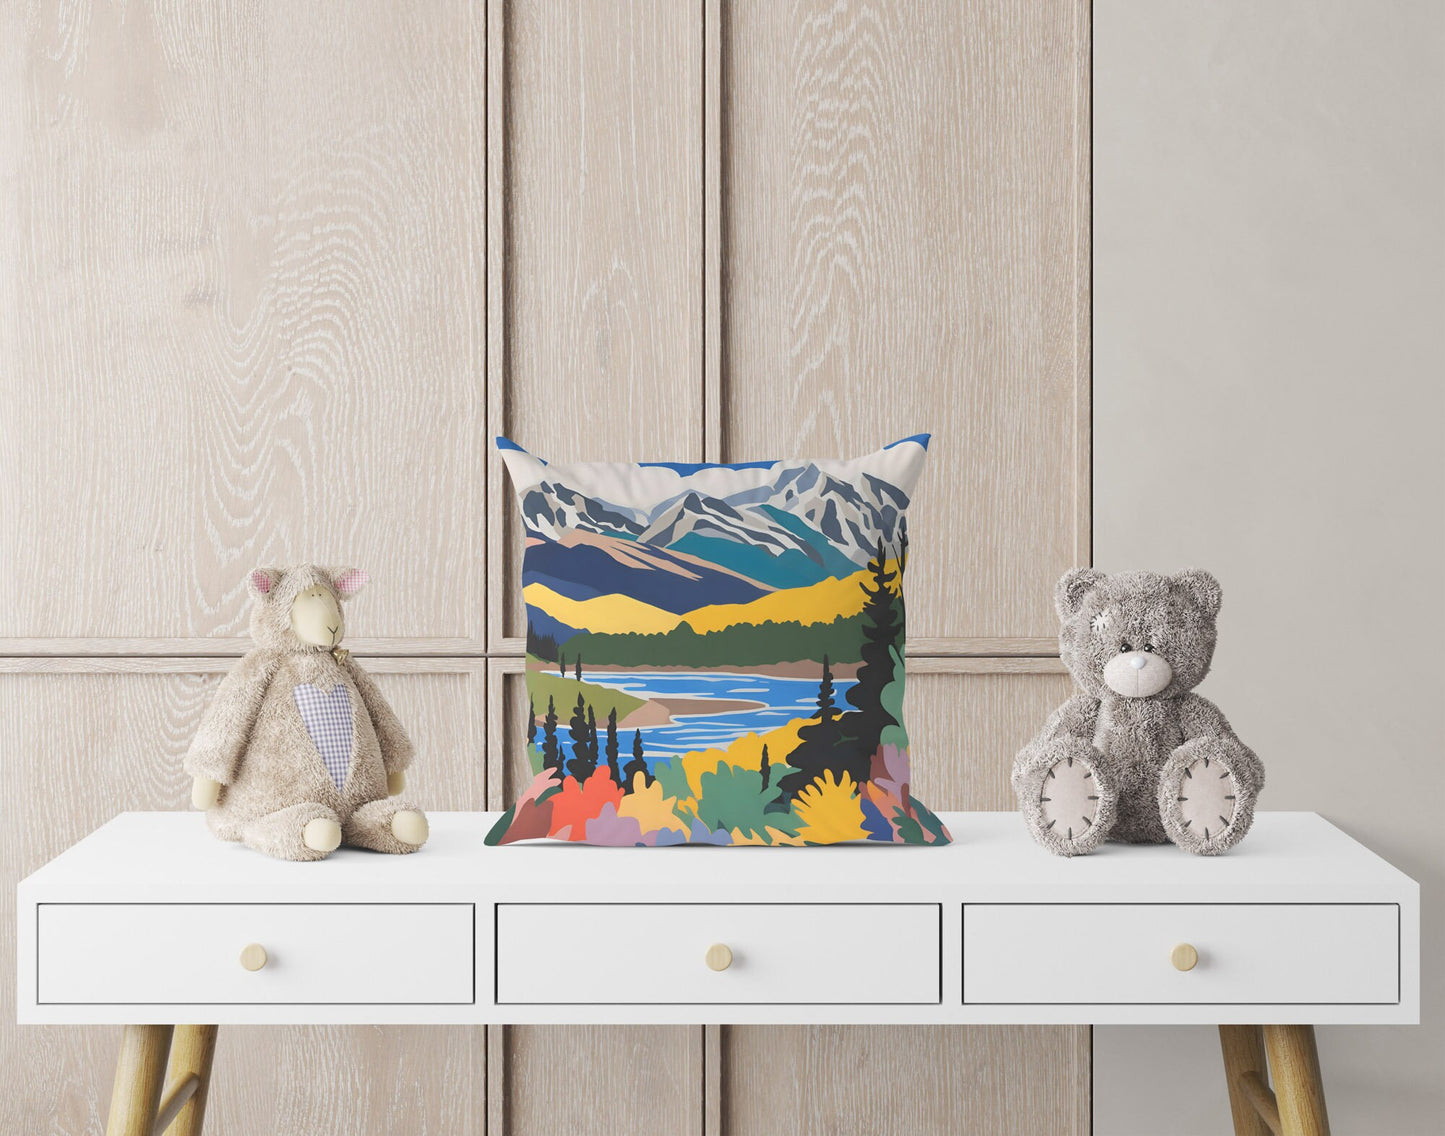 Rocky Mountain National Park, Colorado Throw Pillow, Usa Travel Pillow, Art Pillow, Colorful Pillow Case, Fashion, Large Pillow Cases